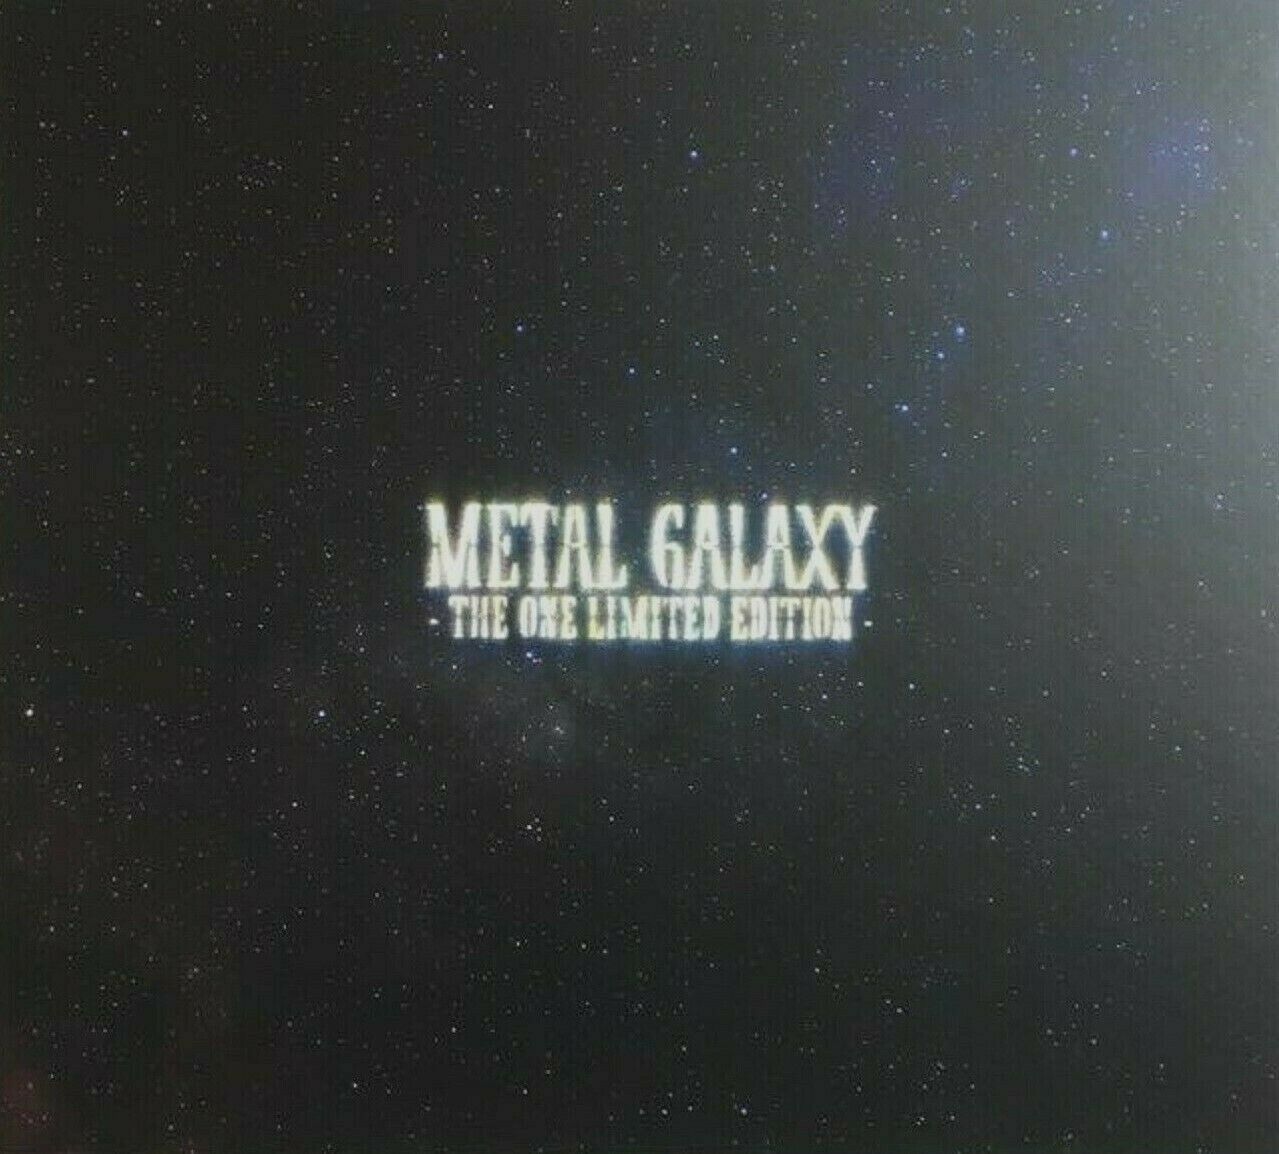 METALGALAXY THE ONE Limited Edition